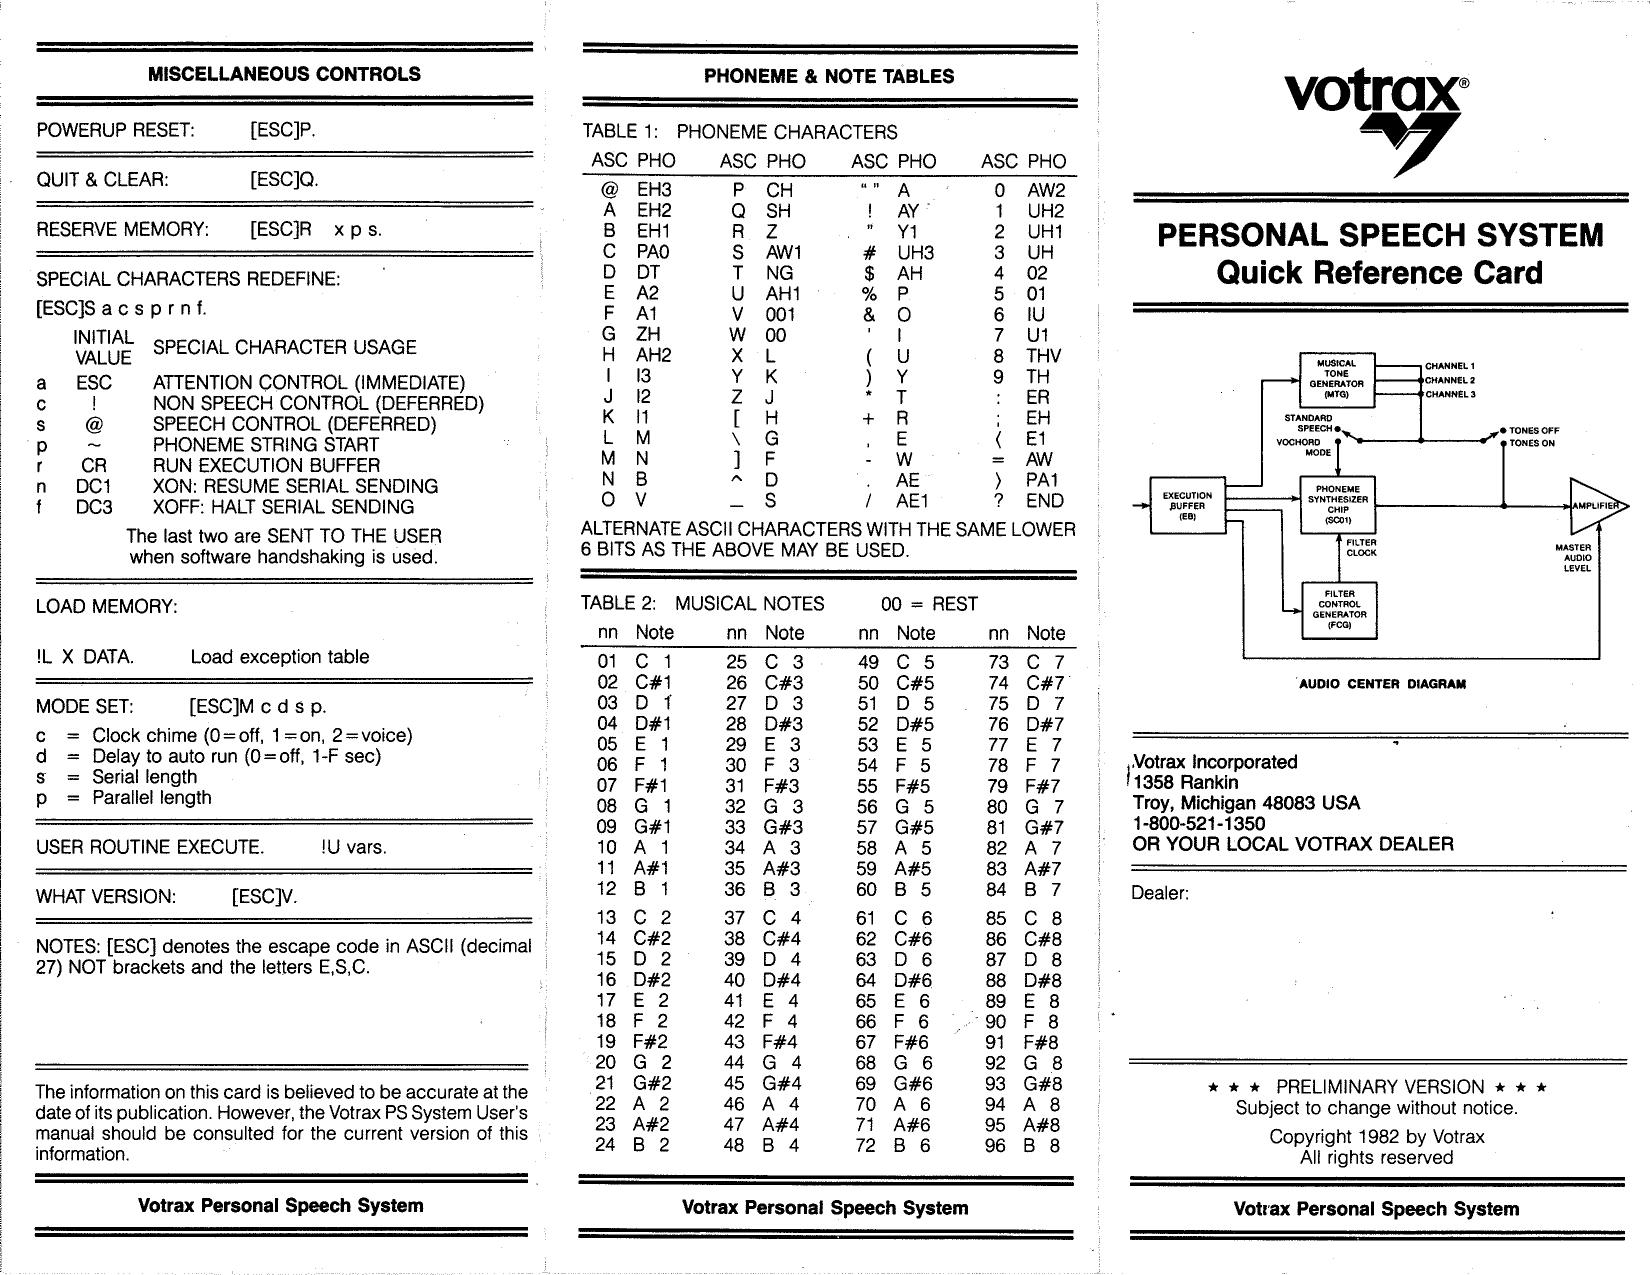 Votrax Personal Speech System